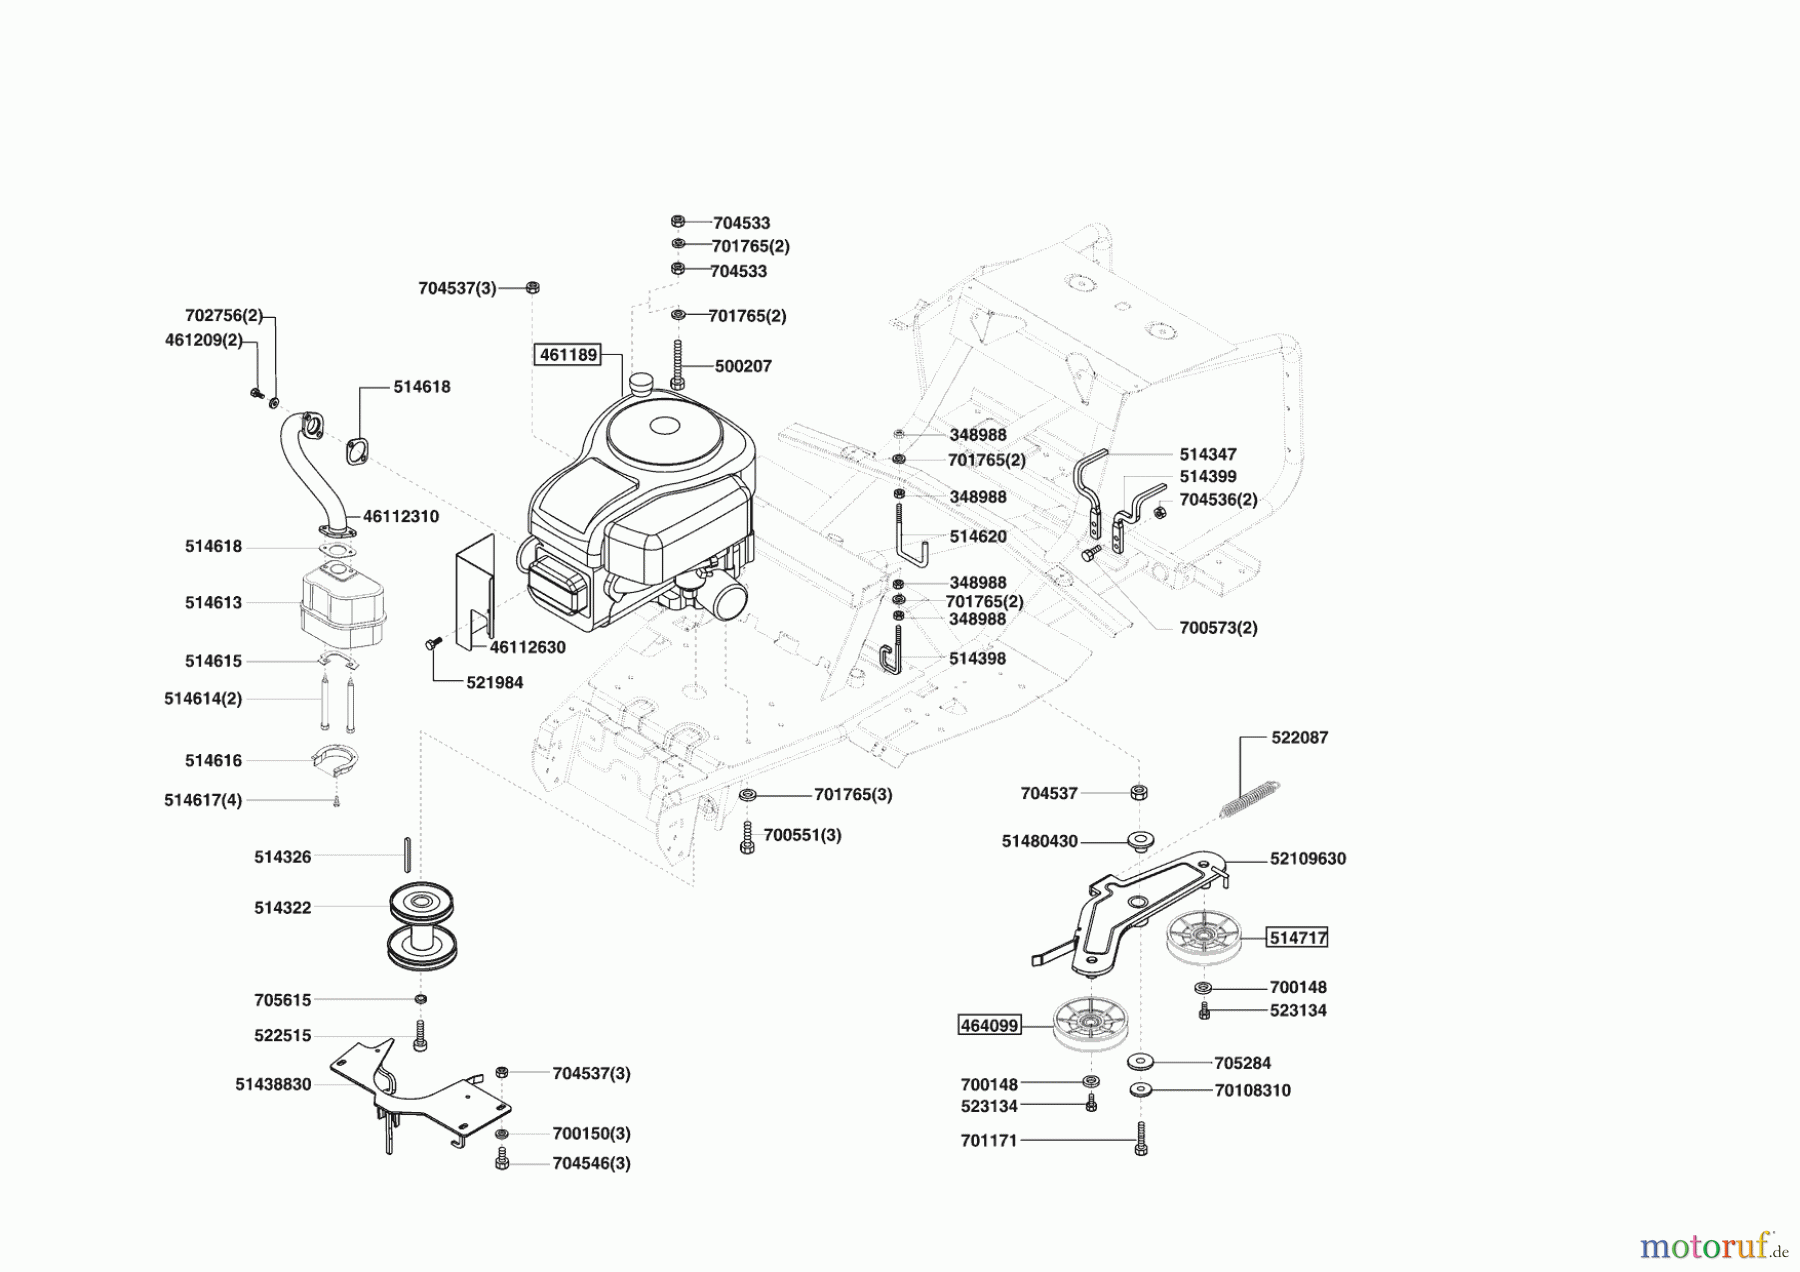  AL-KO Gartentechnik Rasentraktor T13-85 LUX HVC Seite 4